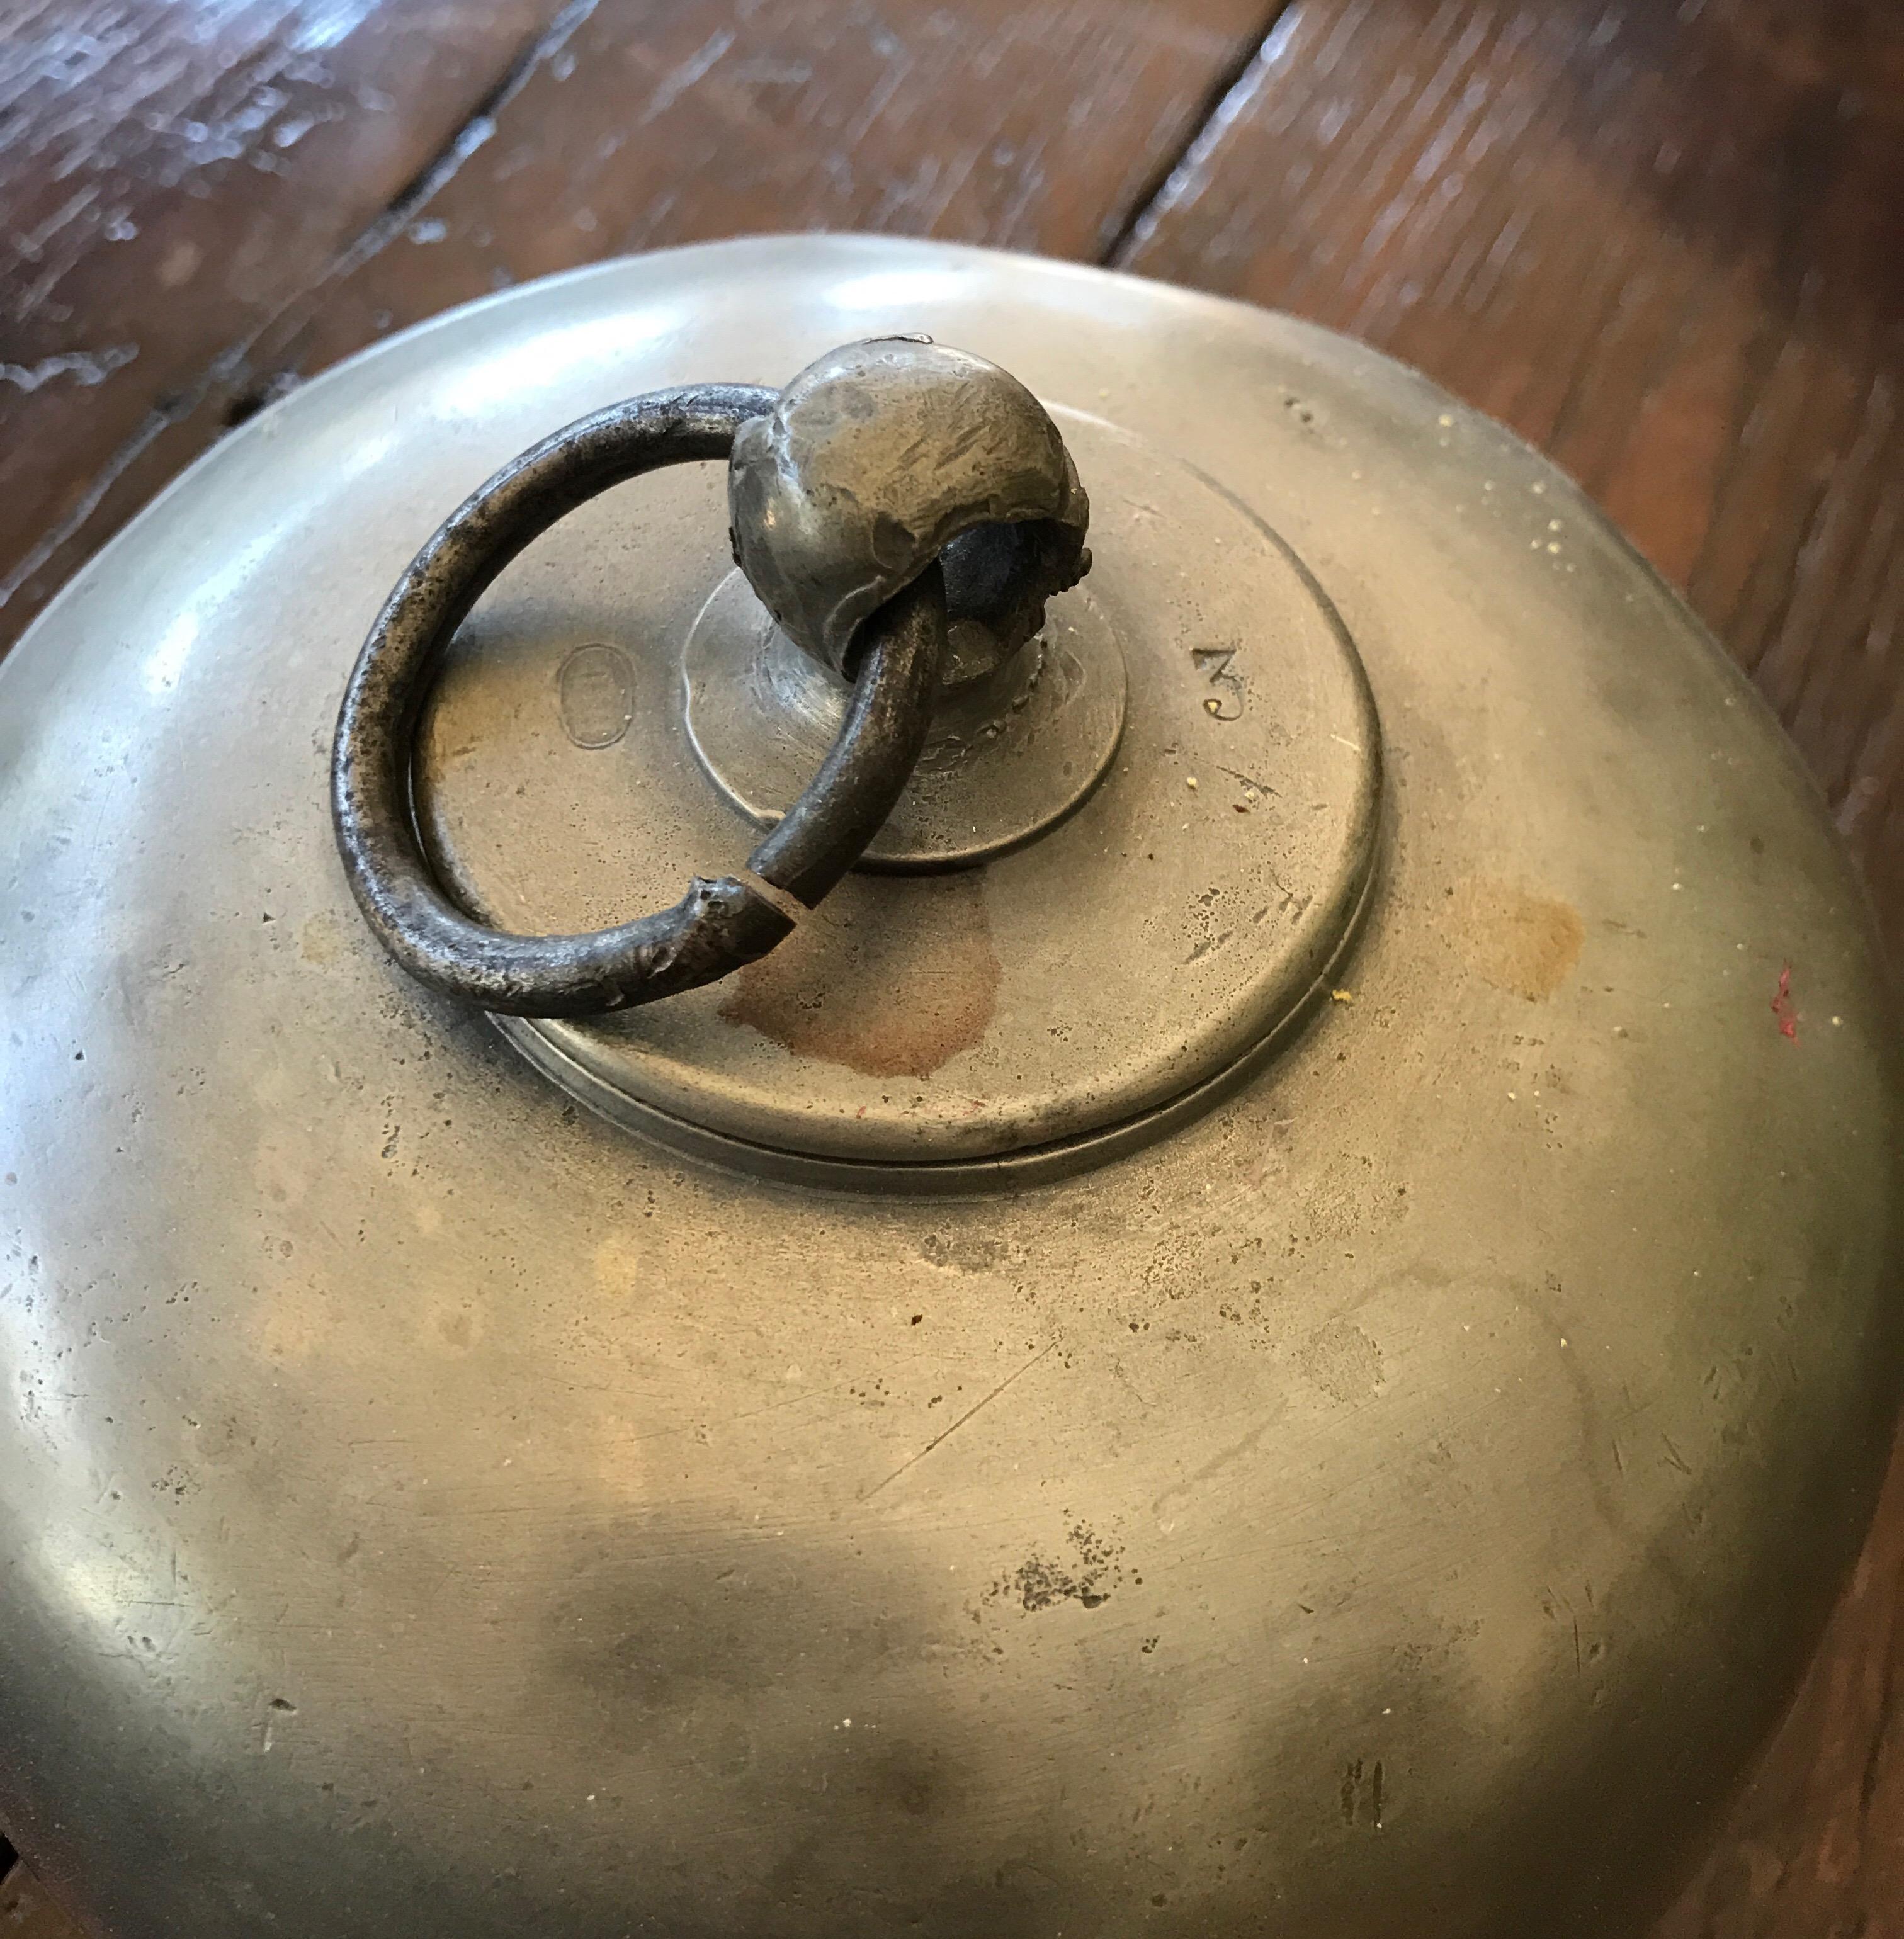 Warmwasserbehälter aus Zinn, 19. Jahrhundert. Maße: 19cm
Zinn.